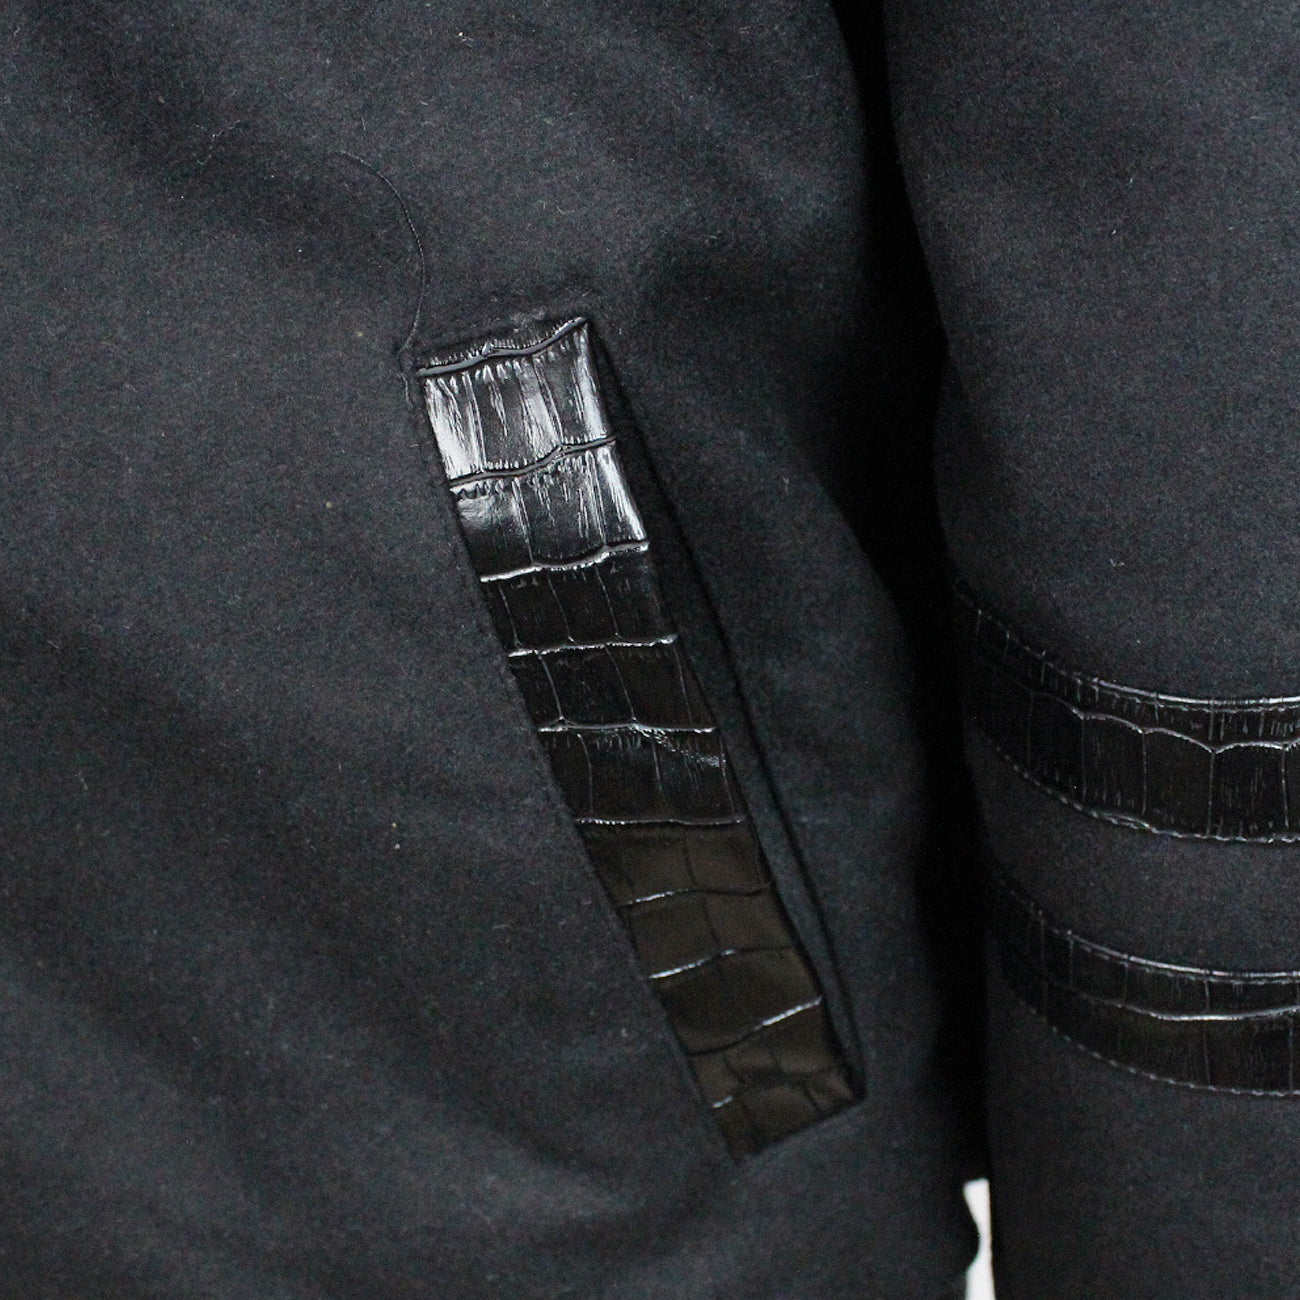 JH Design NBA Men's Reversible Fleece Jacket with Faux Alligator Leather Logos Golden State Warriors Black